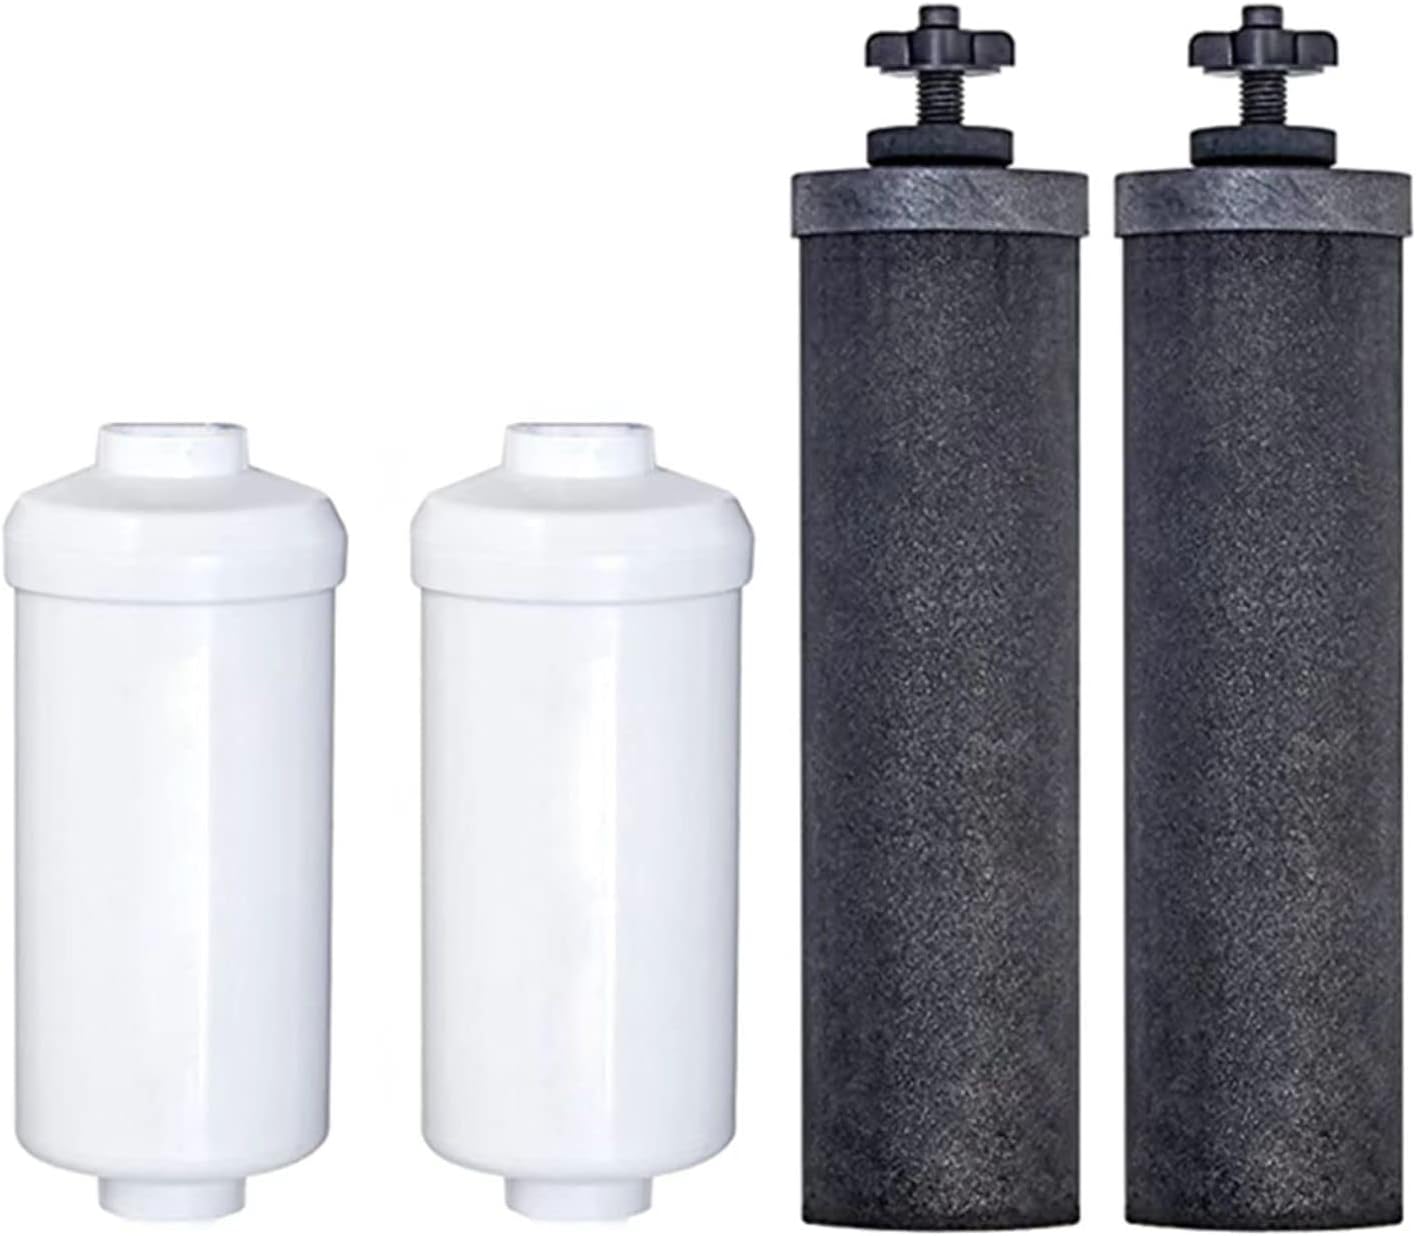 Generic Water Filter Replacement for Black Berkey Filters (BB9-2)